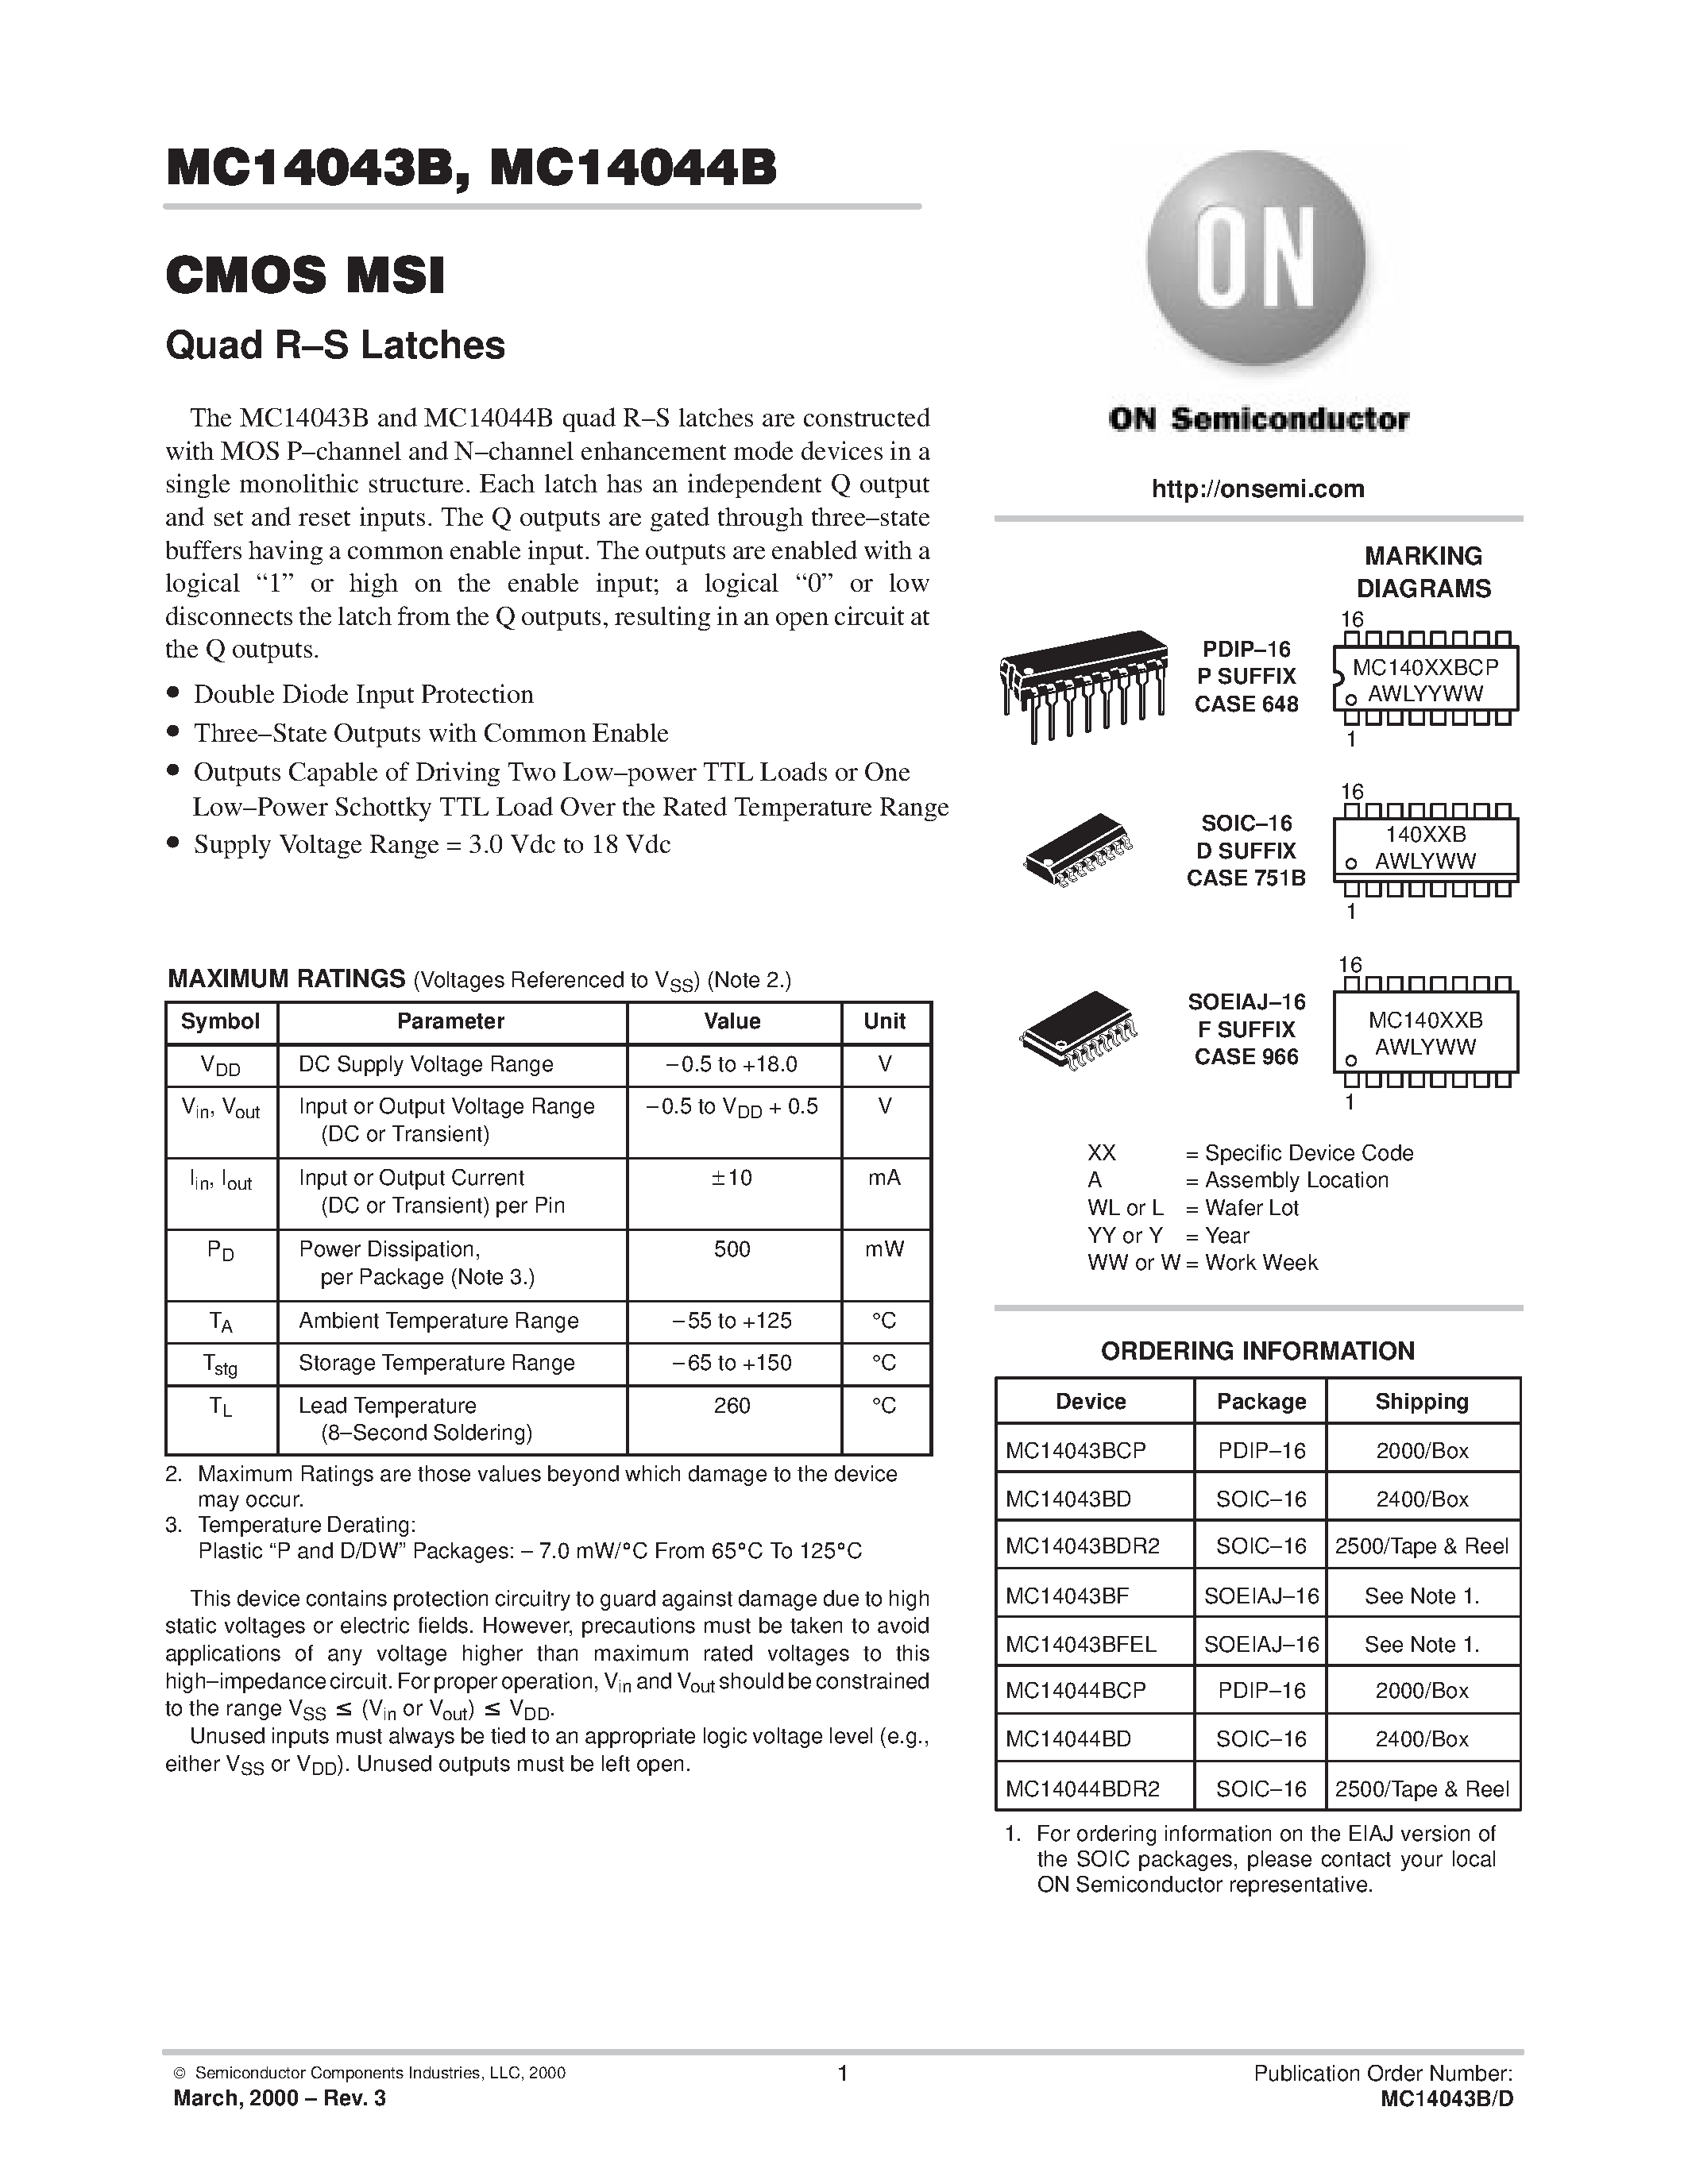 Datasheet MC14044B - CMOS MSI(Quad R-S Latches) page 1